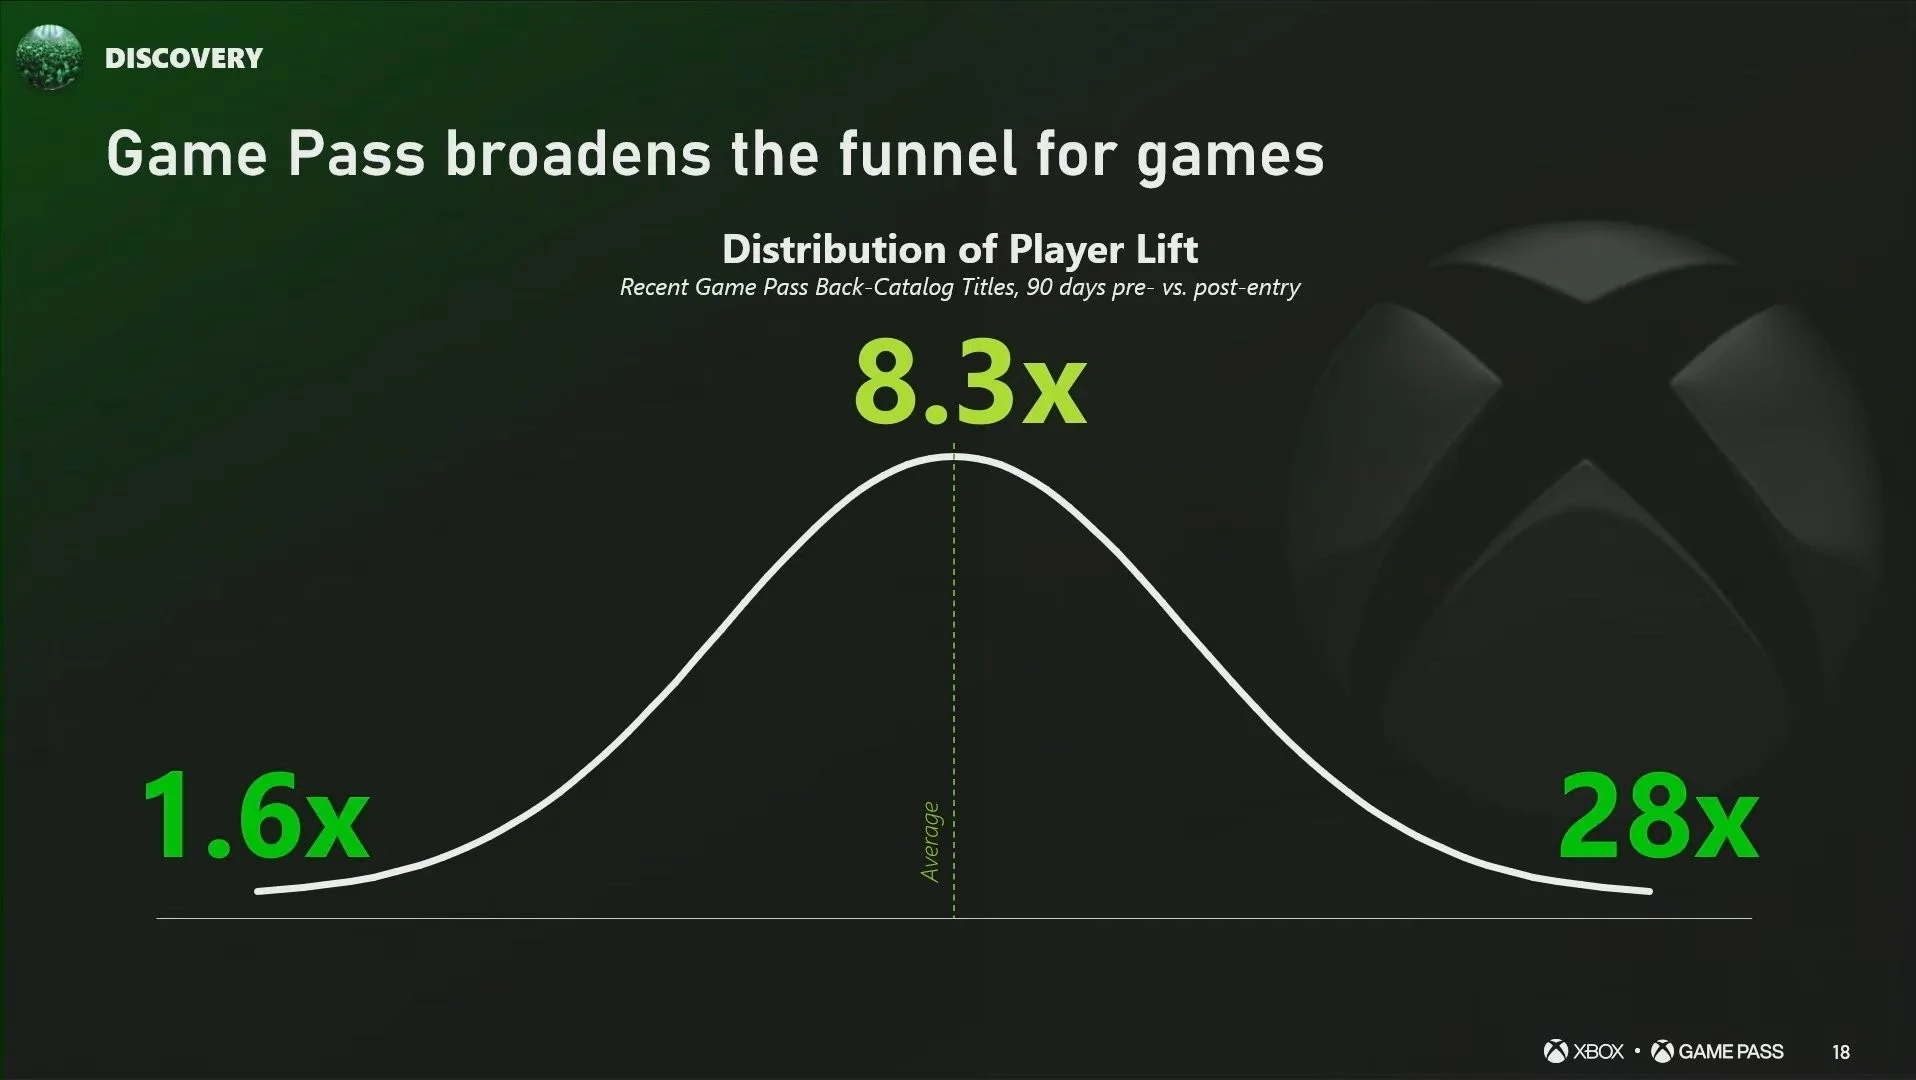 Подписчики Xbox Game Pass пробуют больше жанров и чаще стримят на Twitch - фото 1